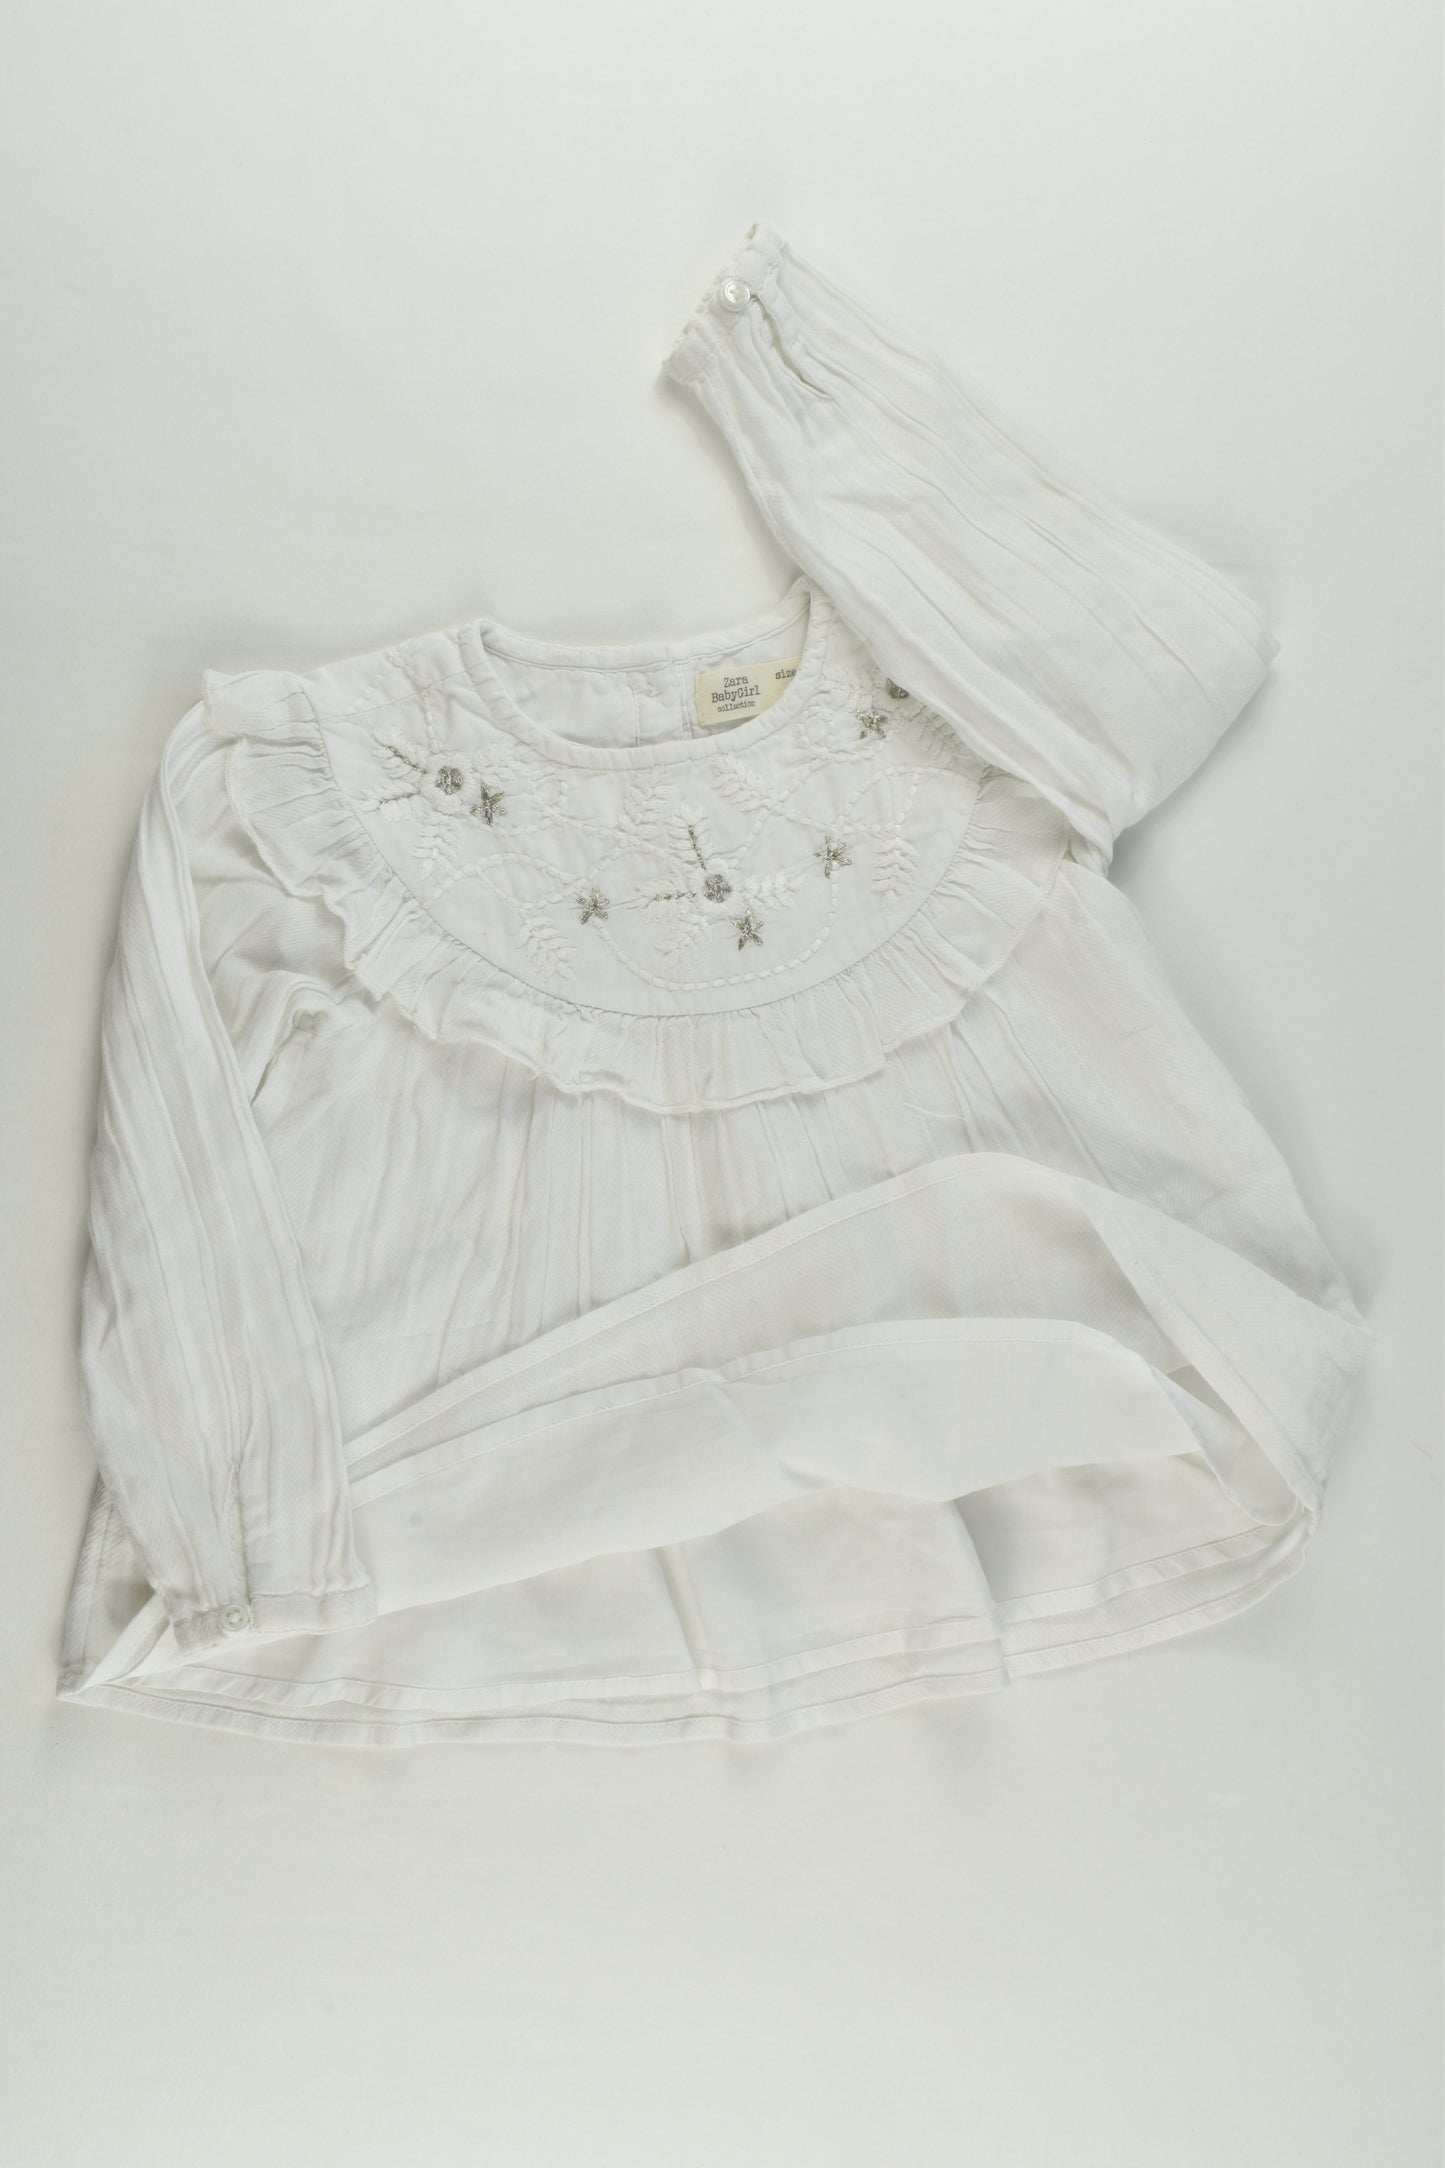 Zara Size 2/3 (98 cm) Lined Blouse